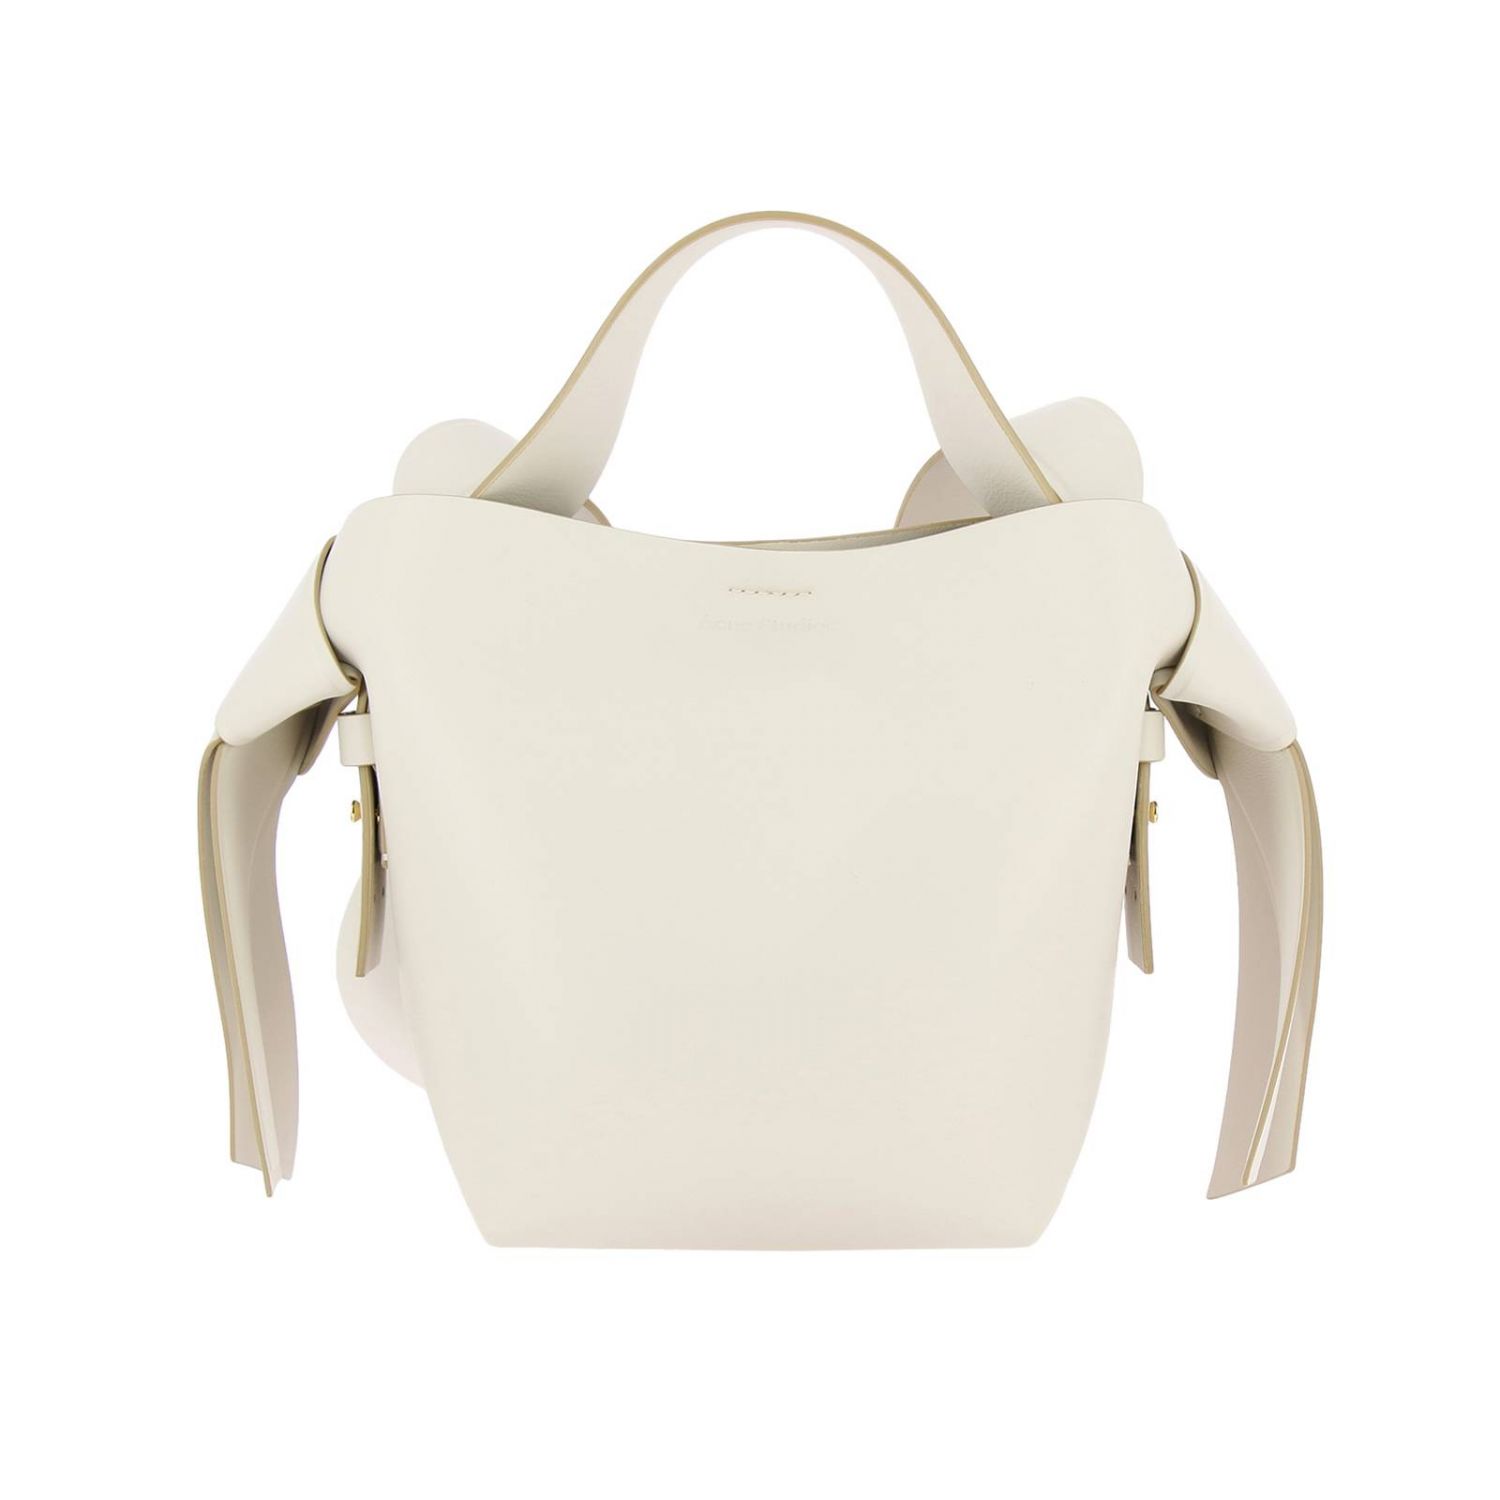 Acne Studios Outlet: Handbag women - White | Handbag Acne Studios ...